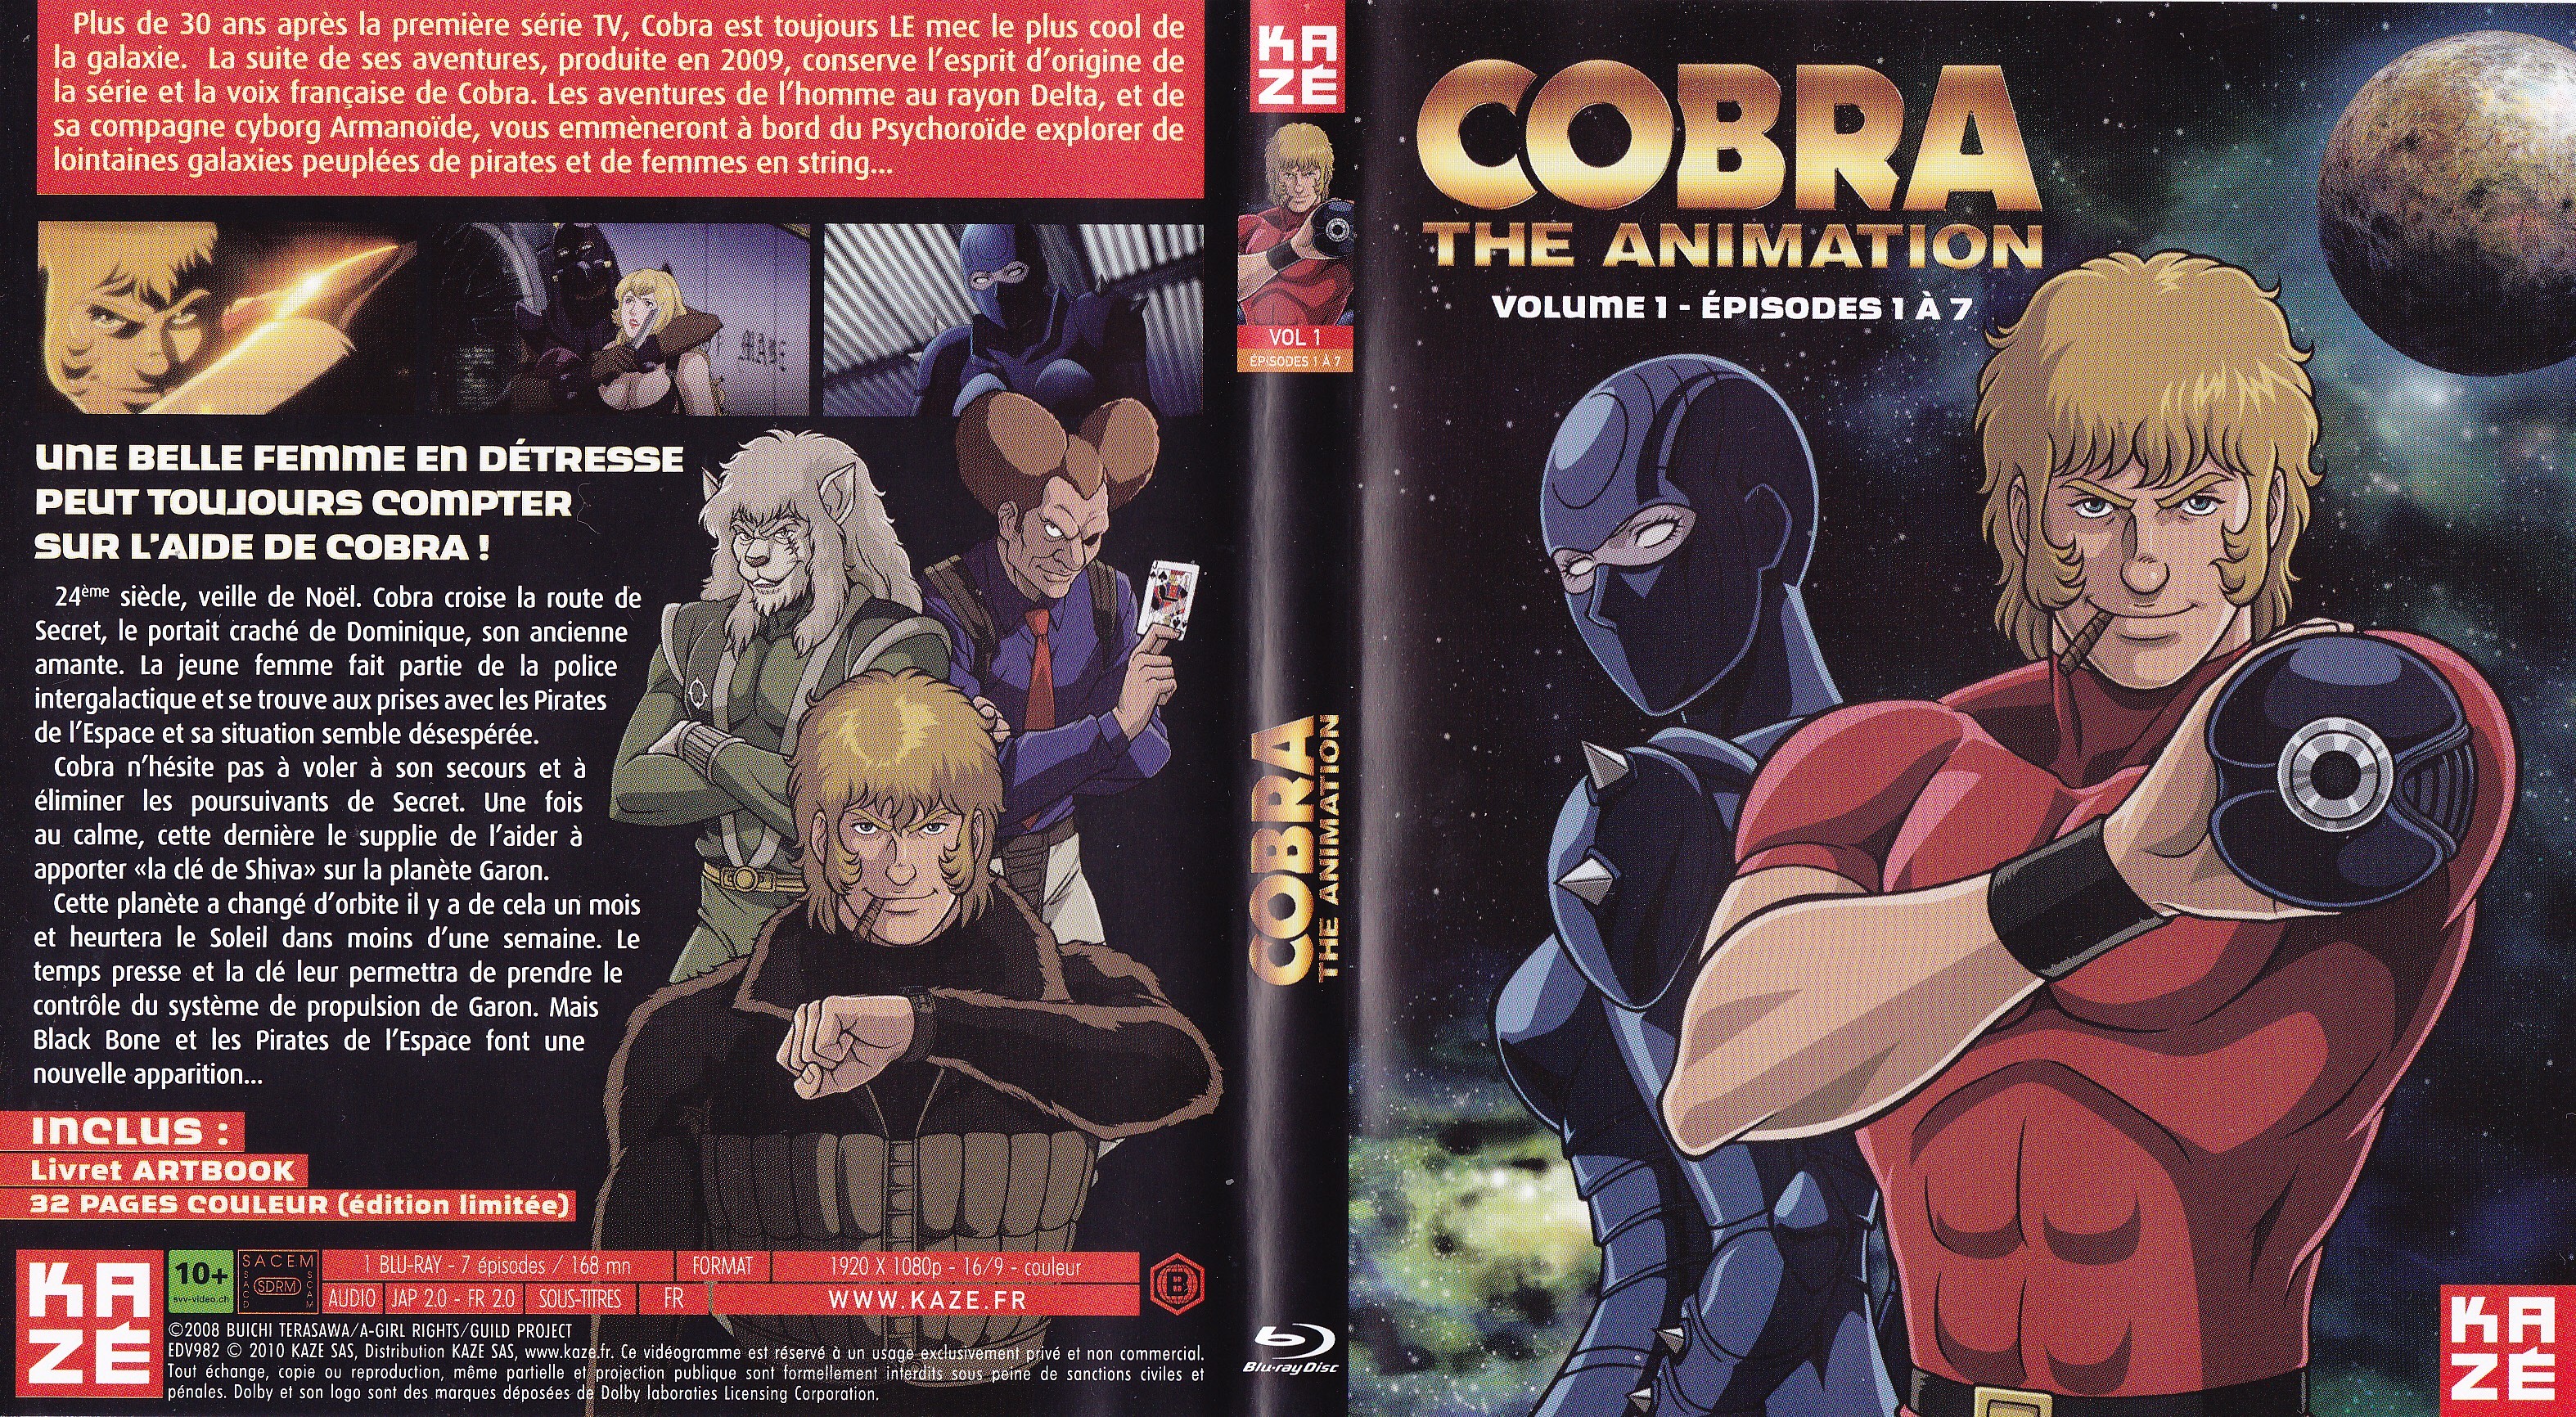 Jaquette DVD Cobra vol 1 (BLU-RAY)